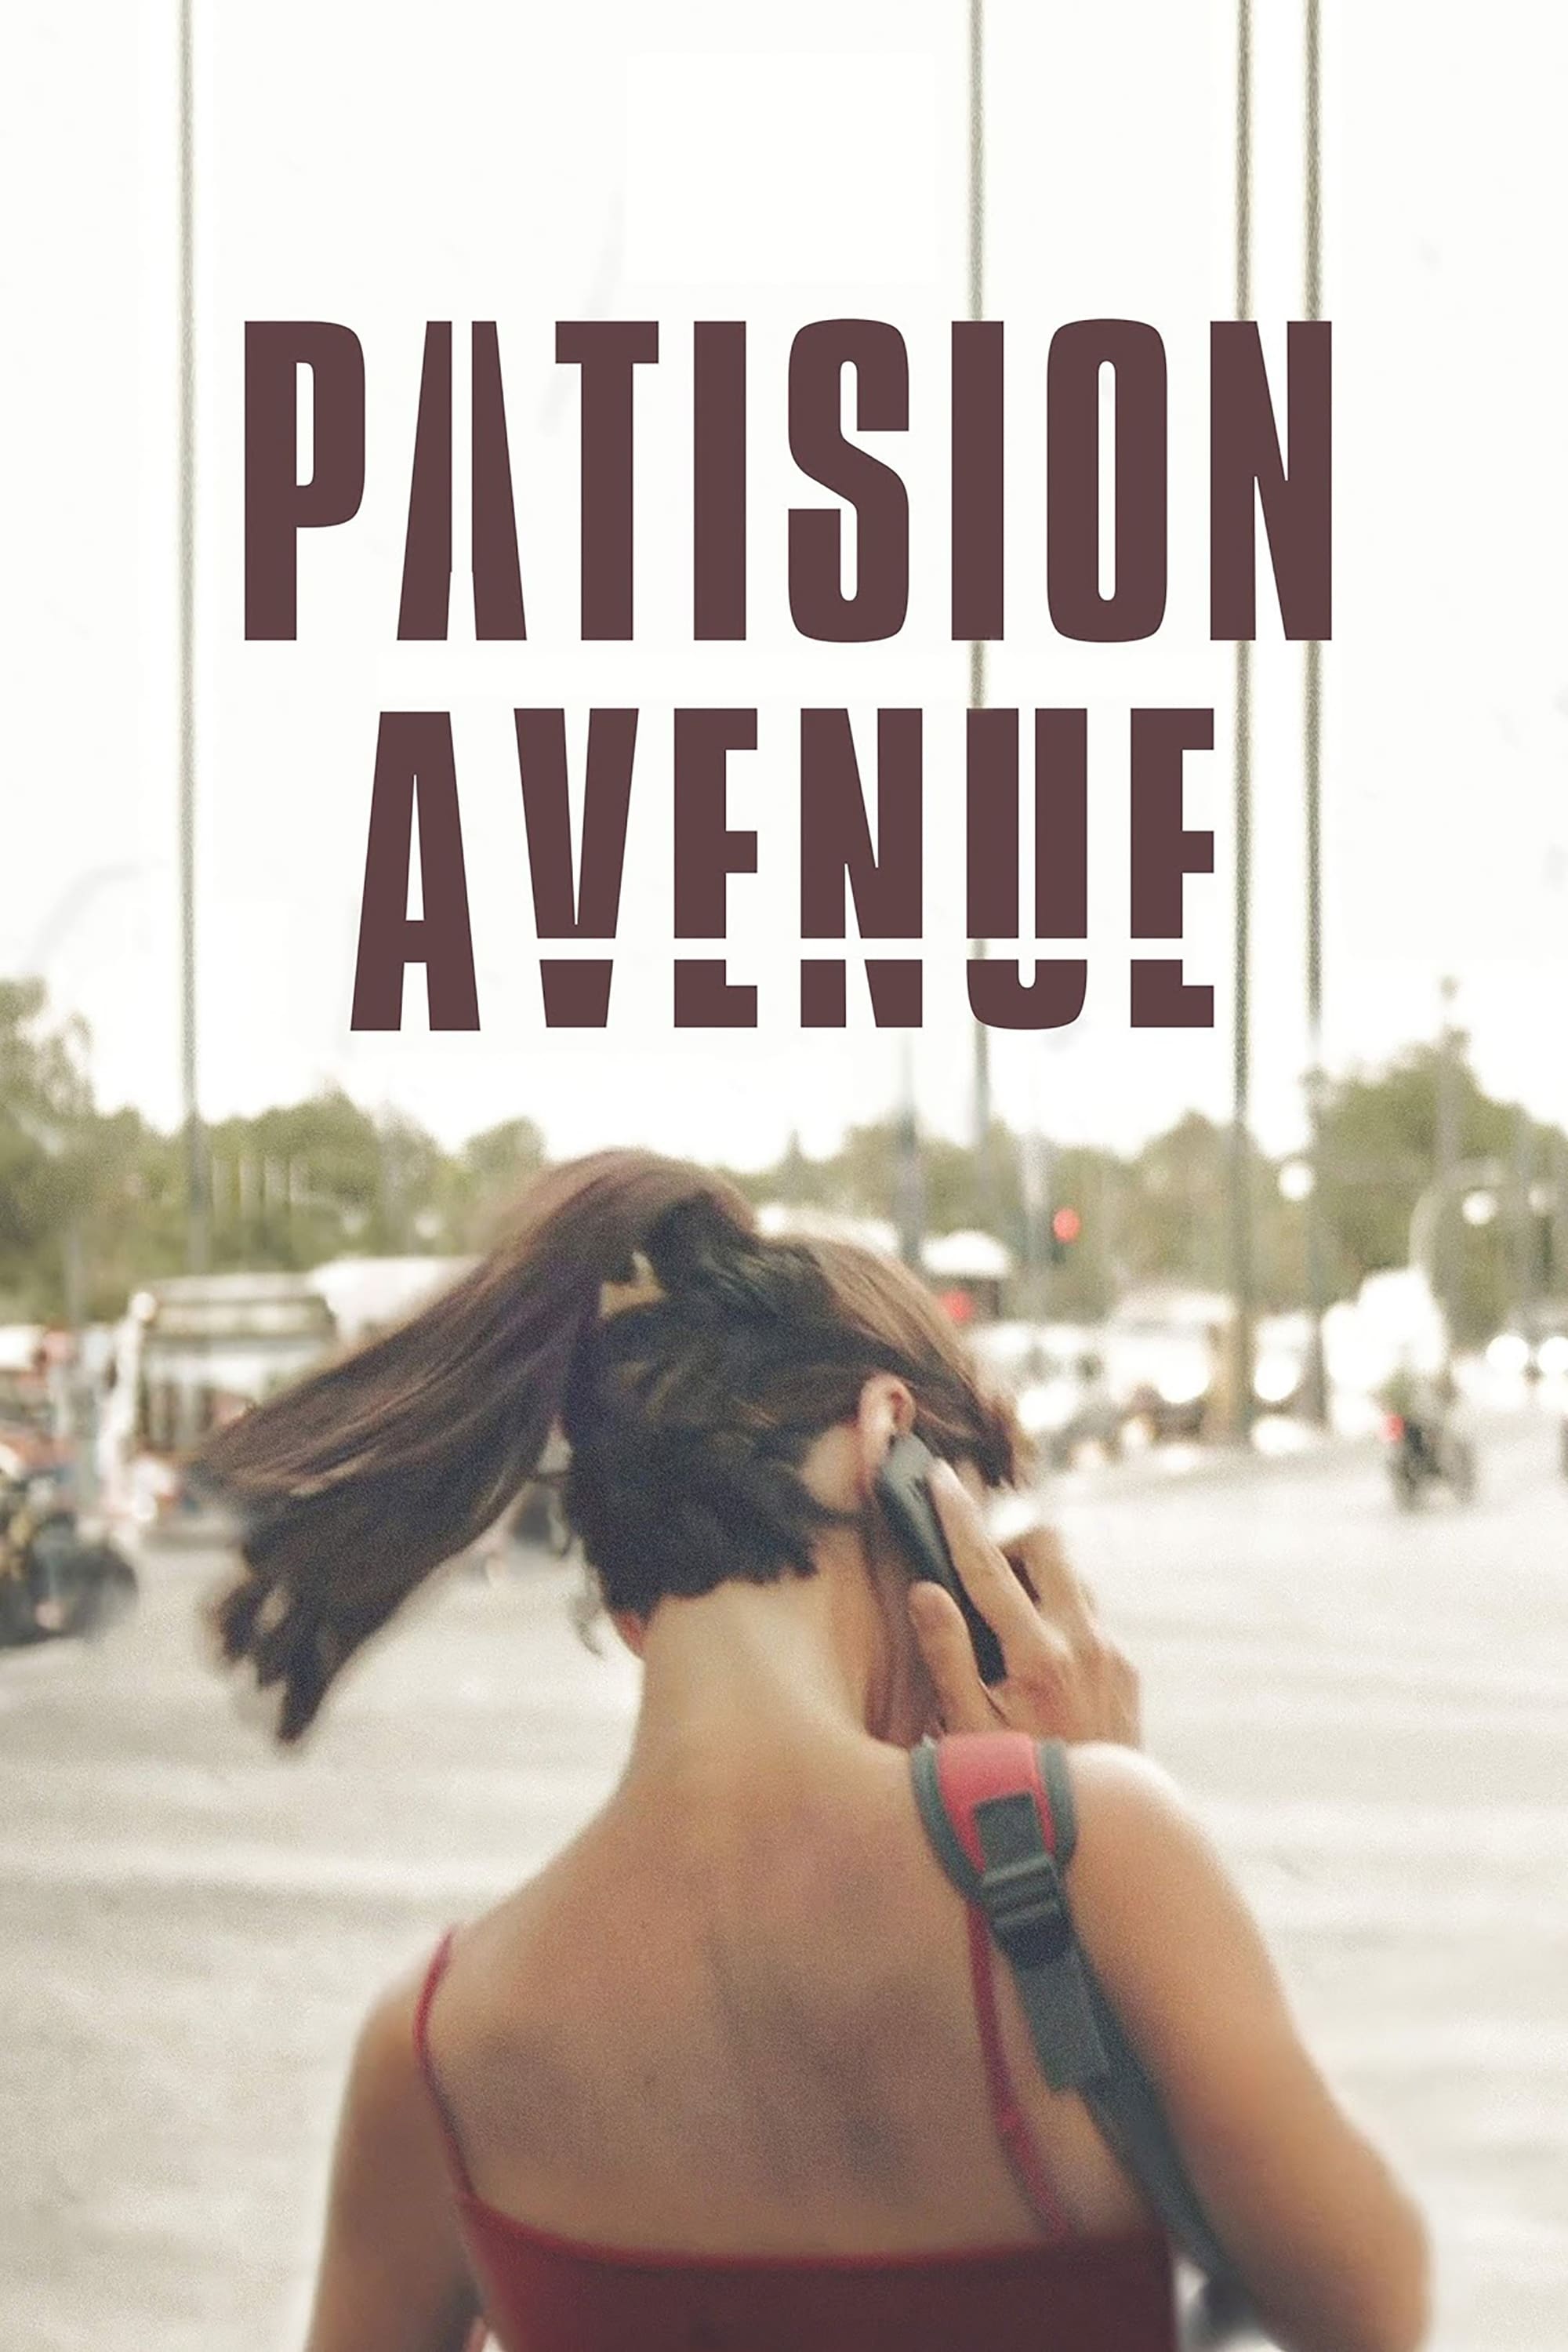 Patision Avenue